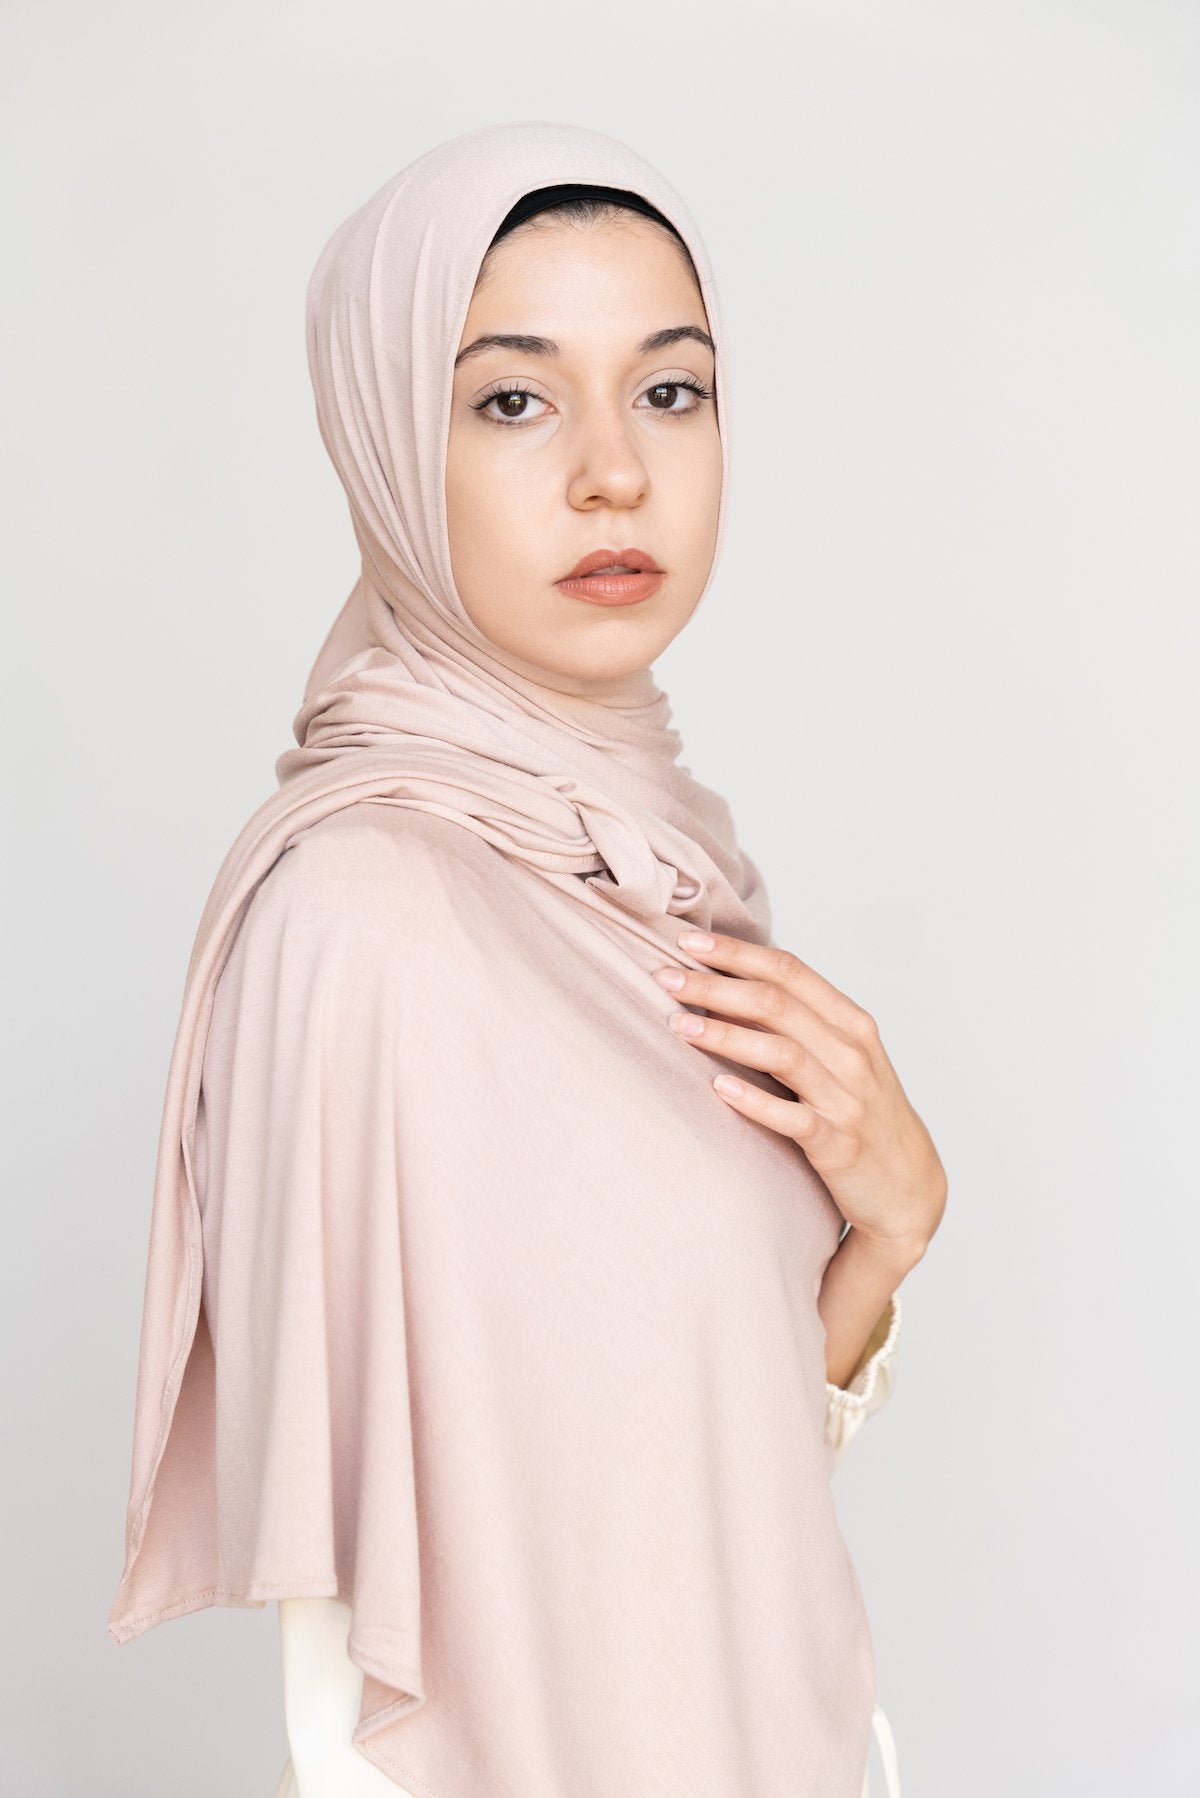 SOFT SAND Premium Jersey-AllScarves-Niswa Fashion